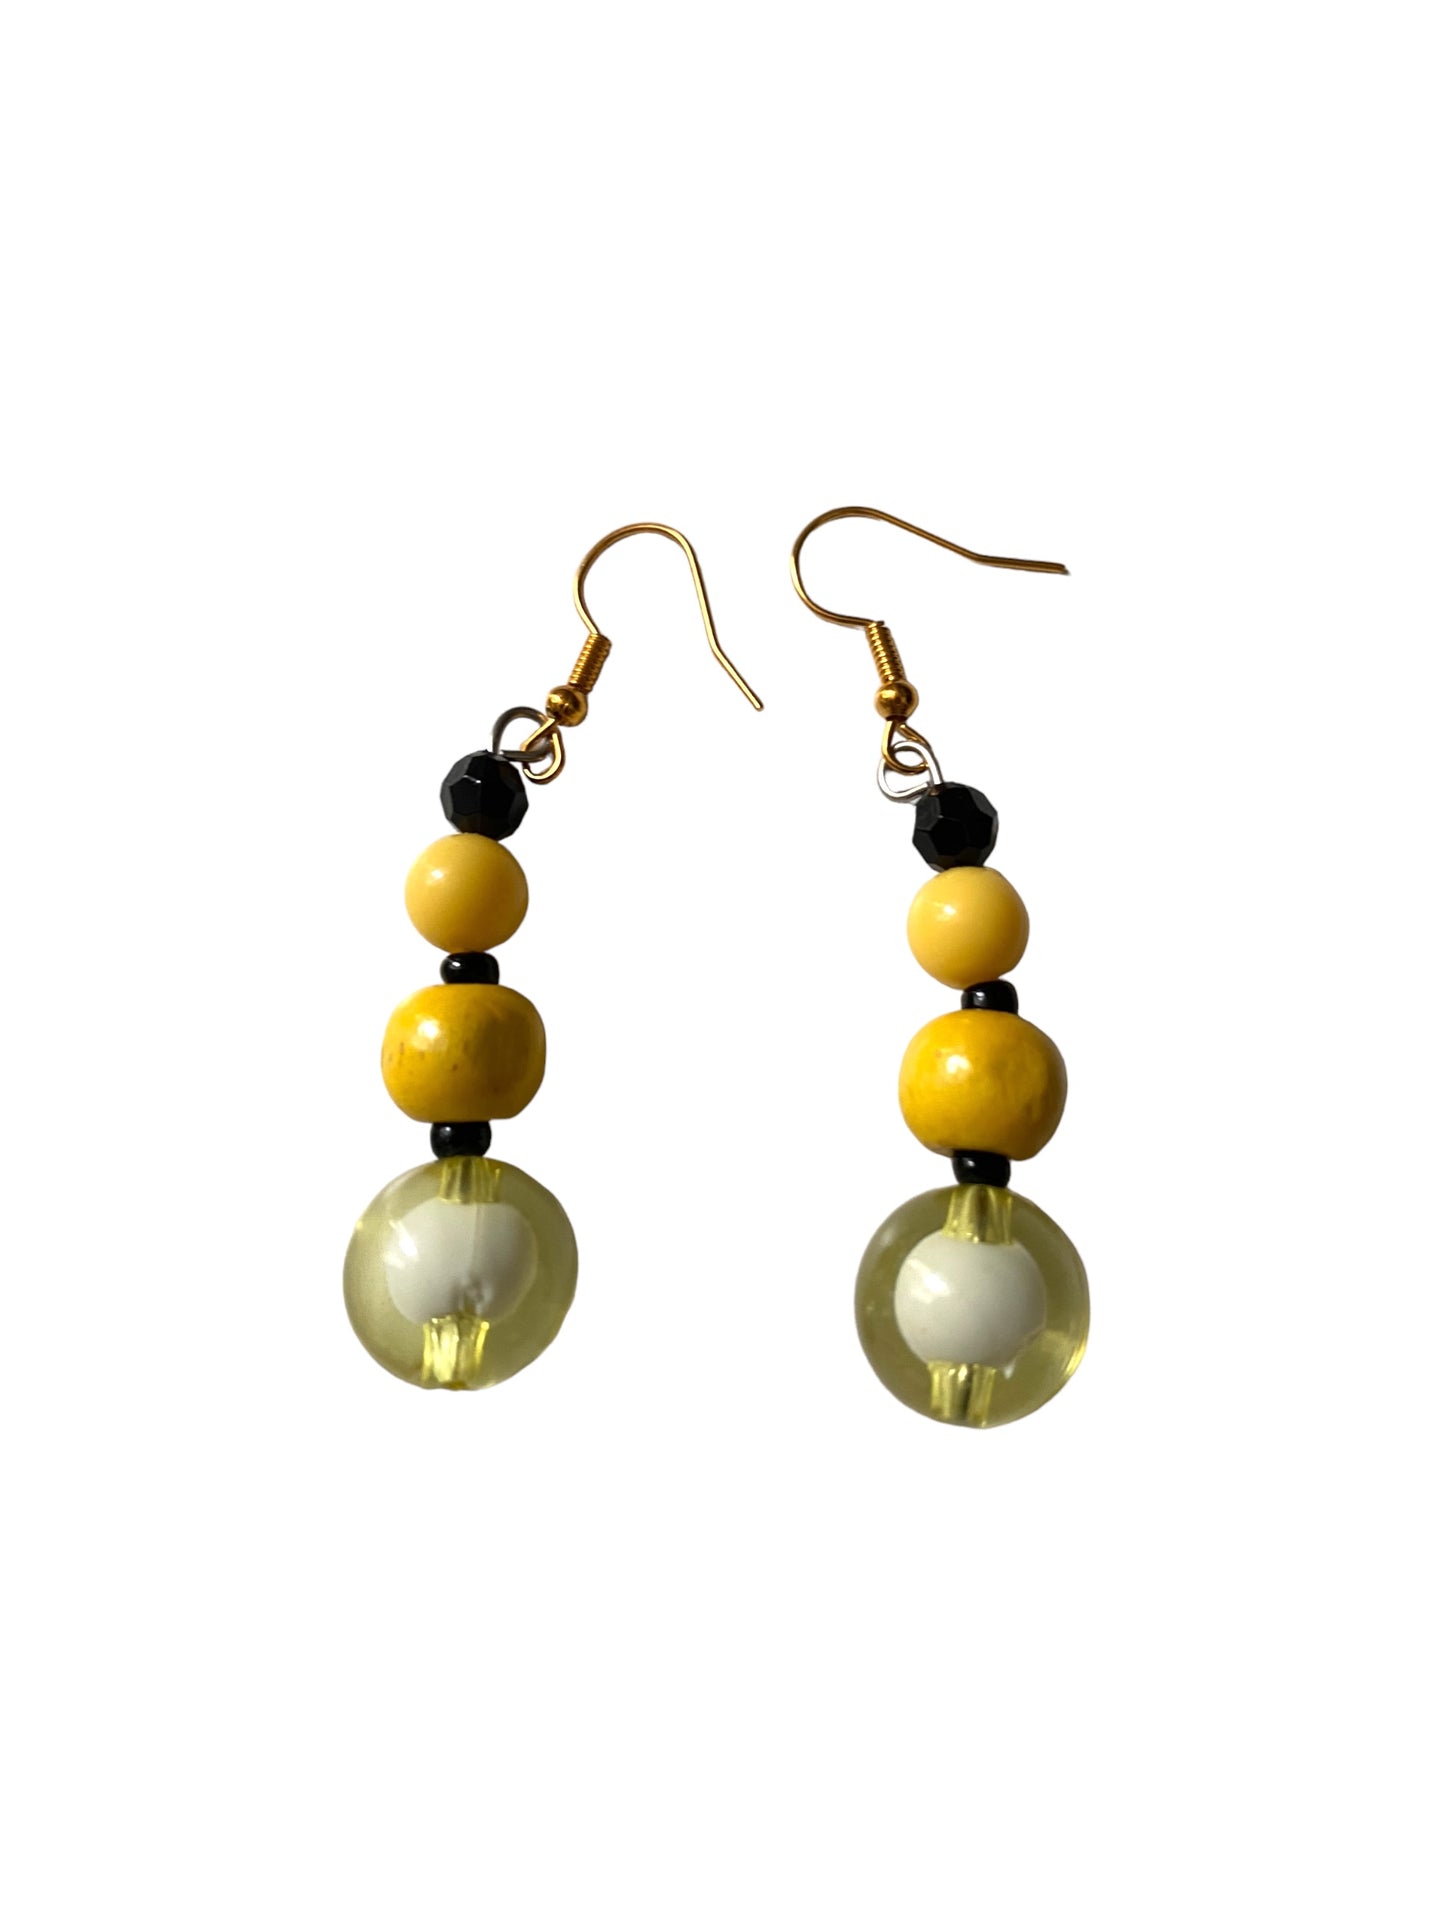 Vintage Earrings Yellow Beads Costume Jewelry Handmade